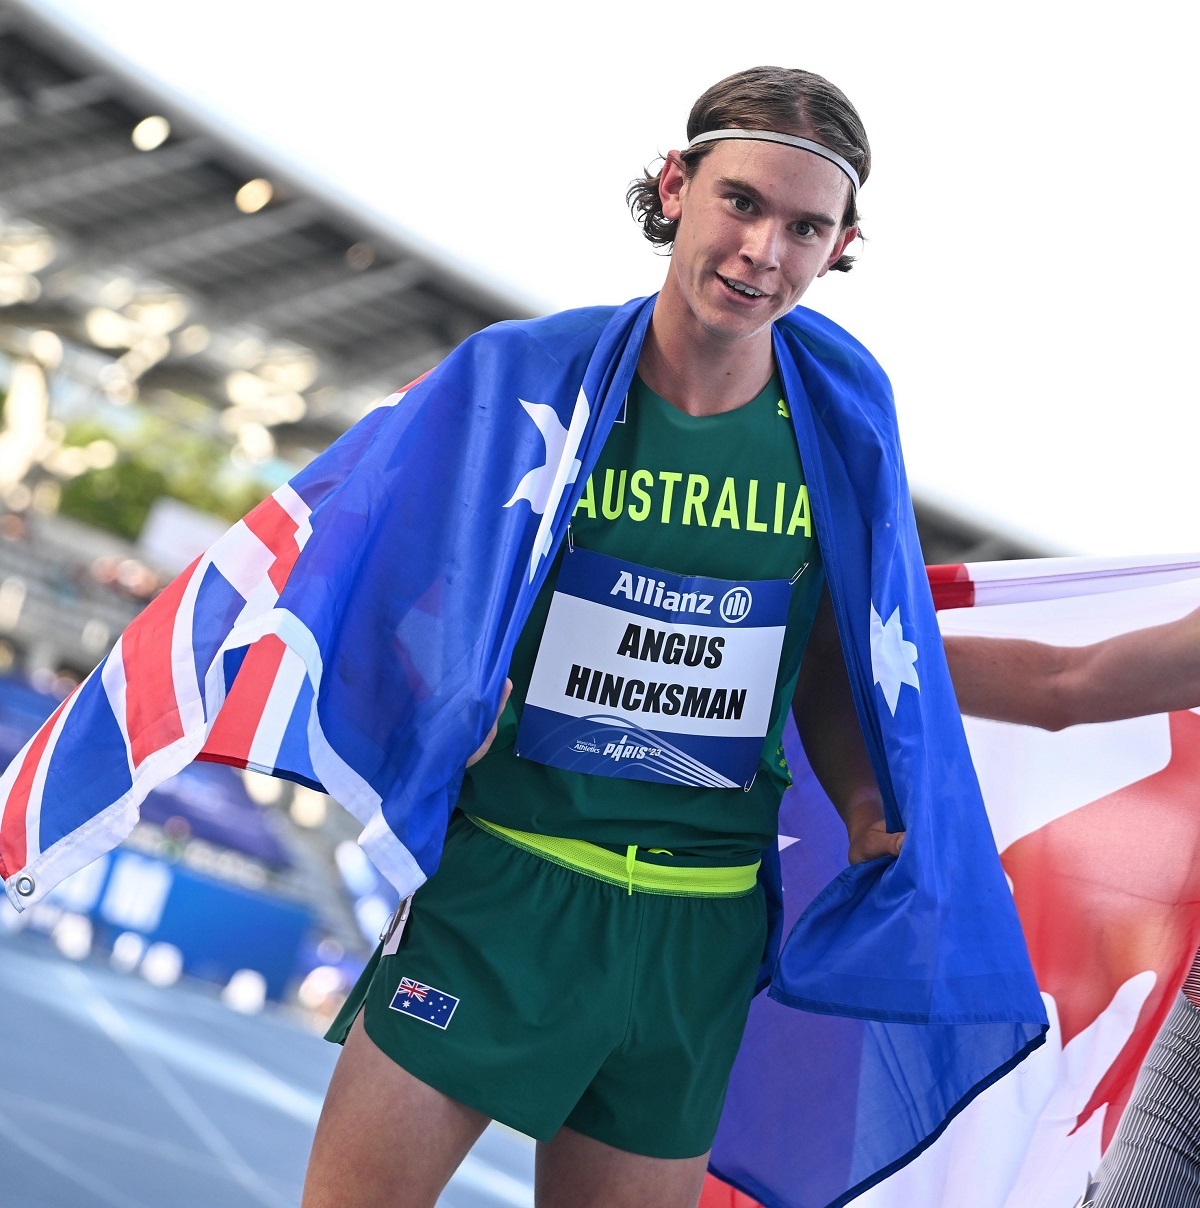 Maslin Beach's Angus Hincksman smiles while draped in an Australian flag after winning his bronze medal.